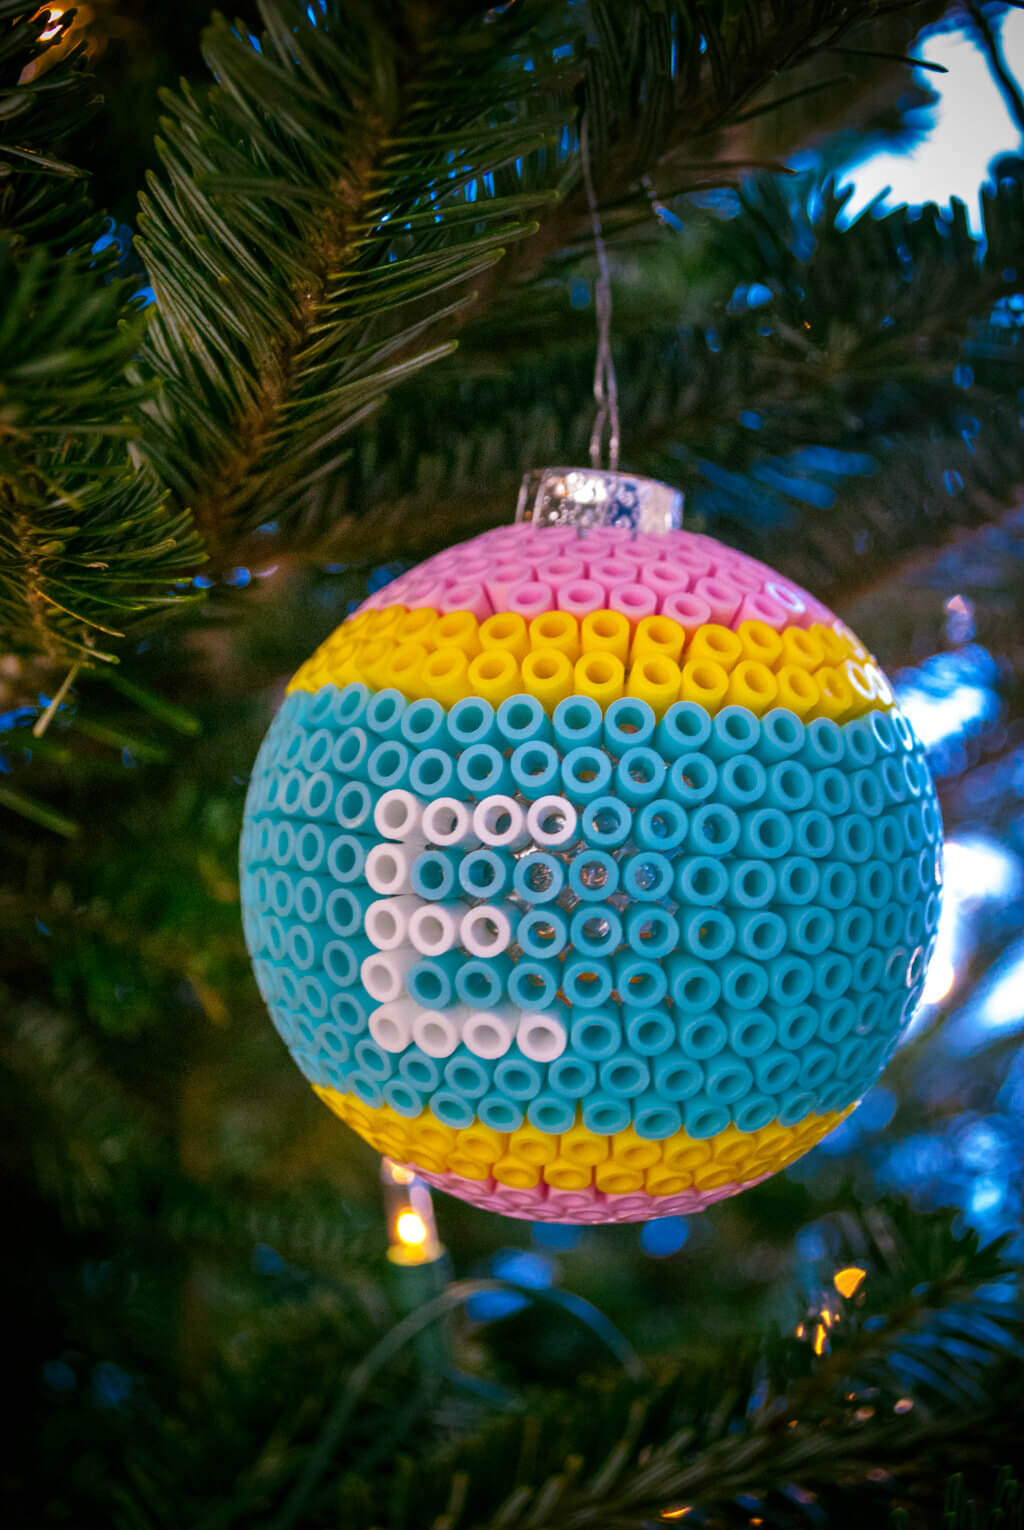 Glass ball DIY Christmas tree ornament with Perler beads